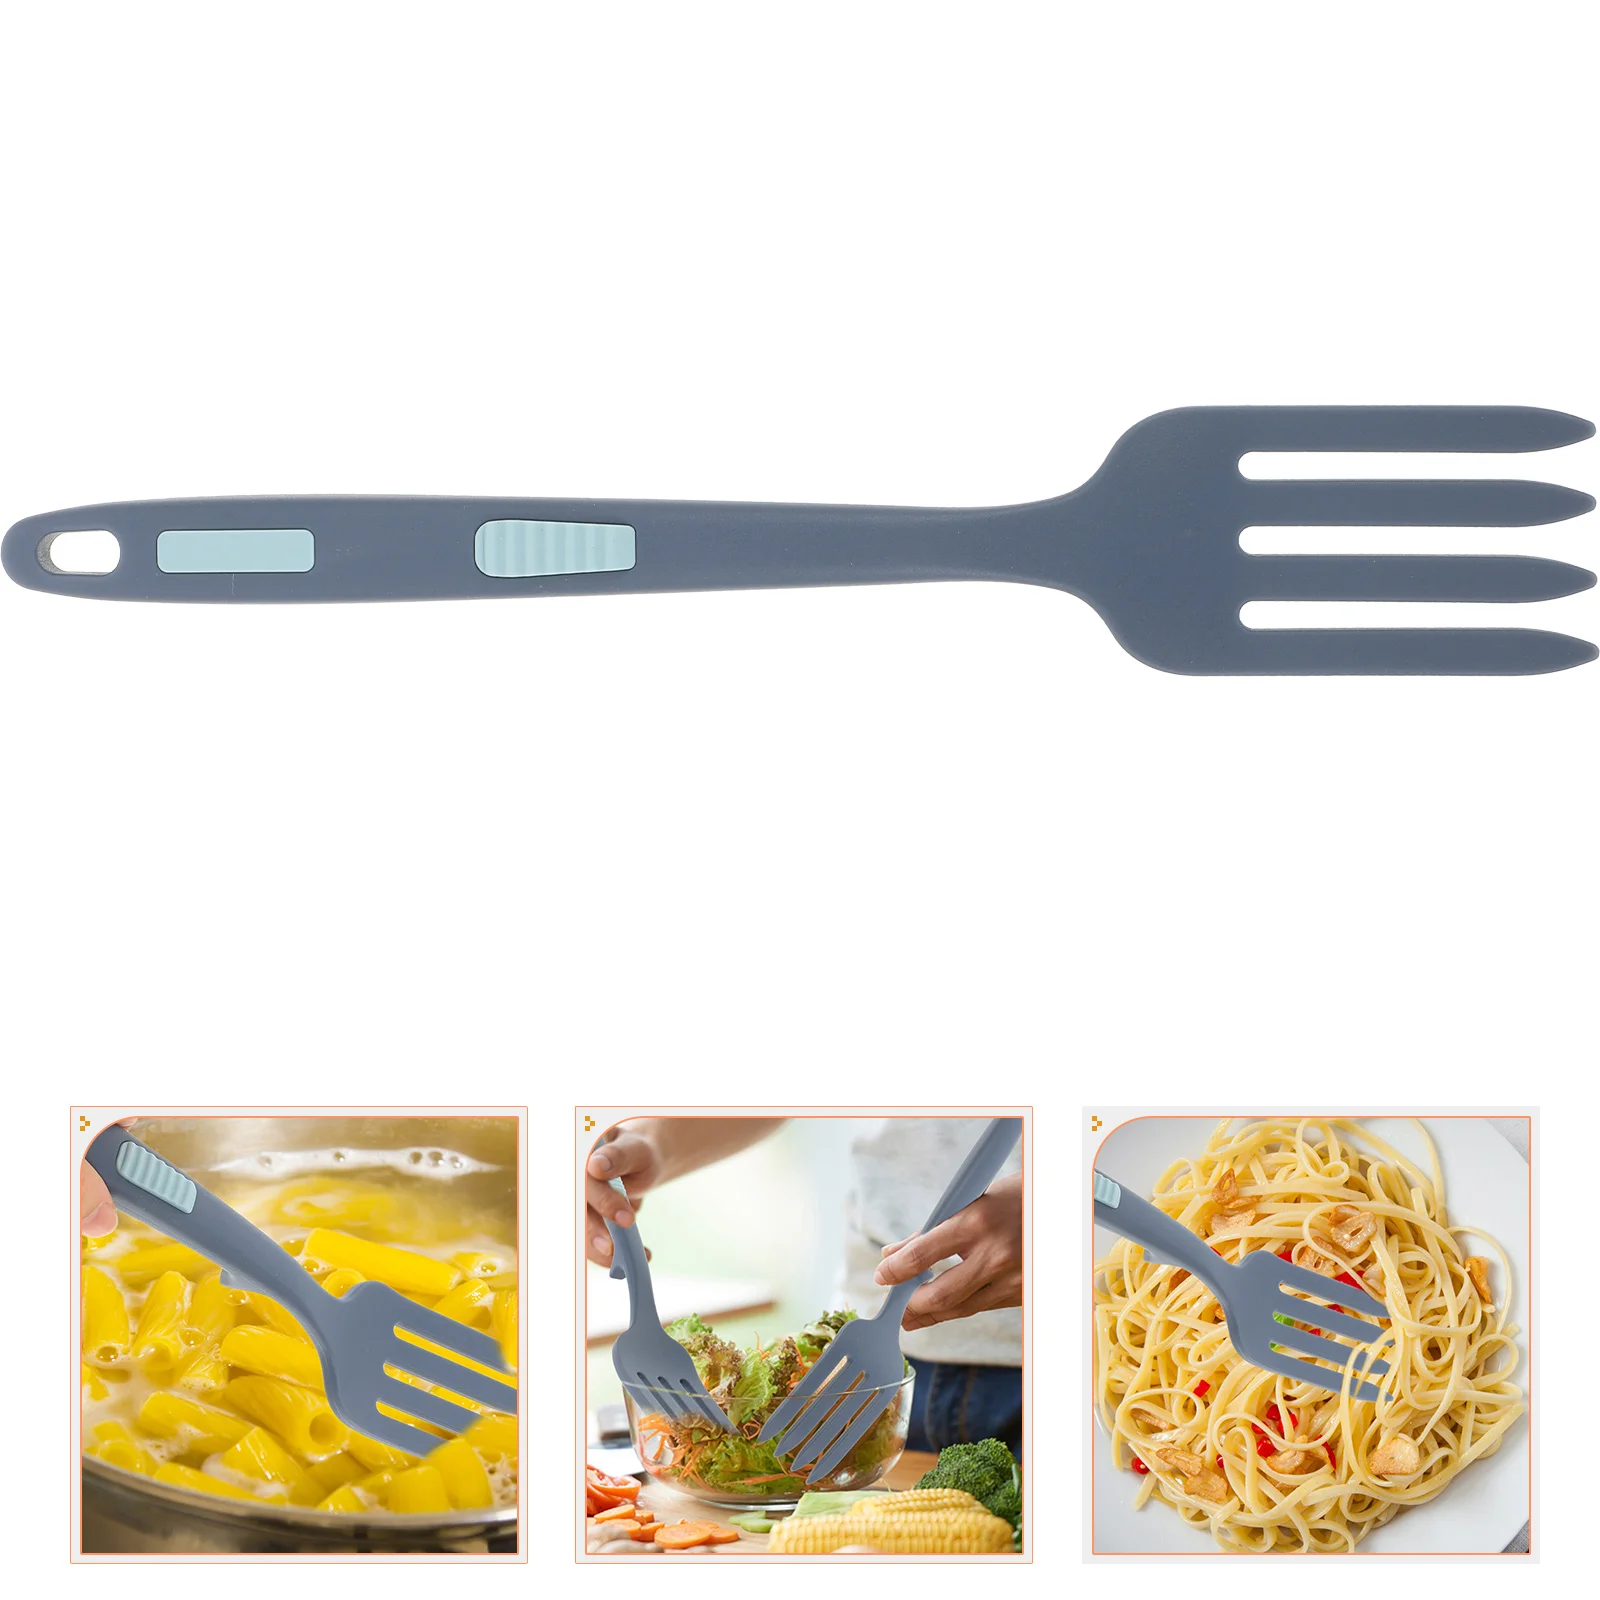 

Silicone Fork Wear-resistant Dinner Cooking Multi-function Food Pasta Server Reusable Kitchen Fruit Strainer